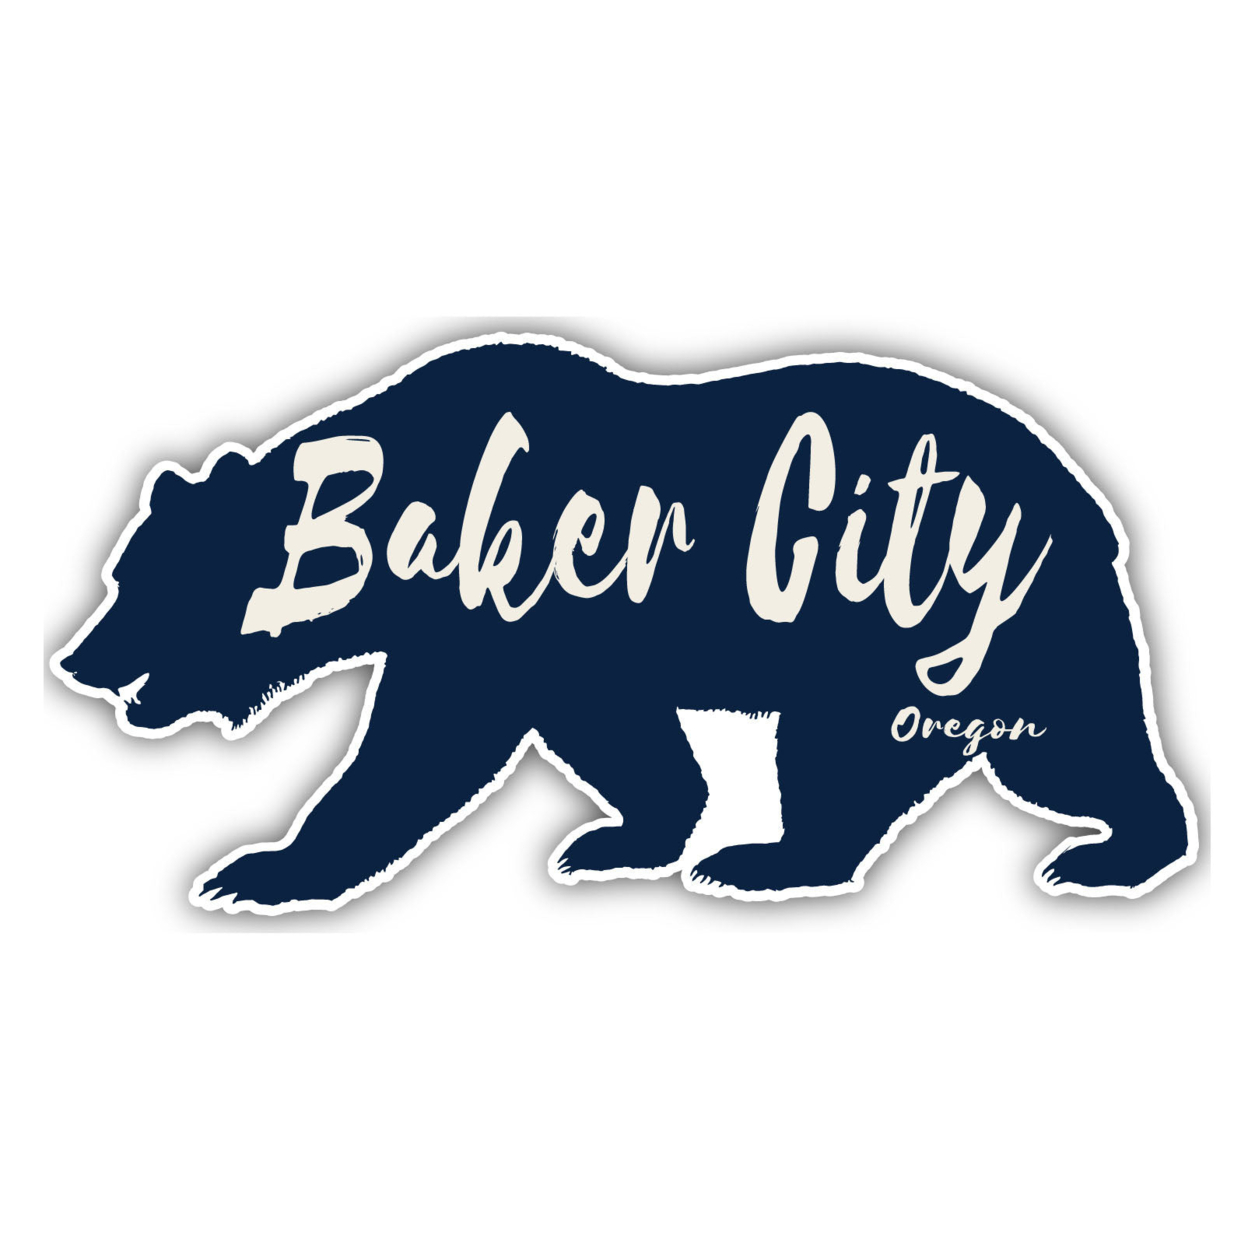 Baker City Oregon Souvenir Decorative Stickers (Choose Theme And Size) - 4-Pack, 8-Inch, Bear